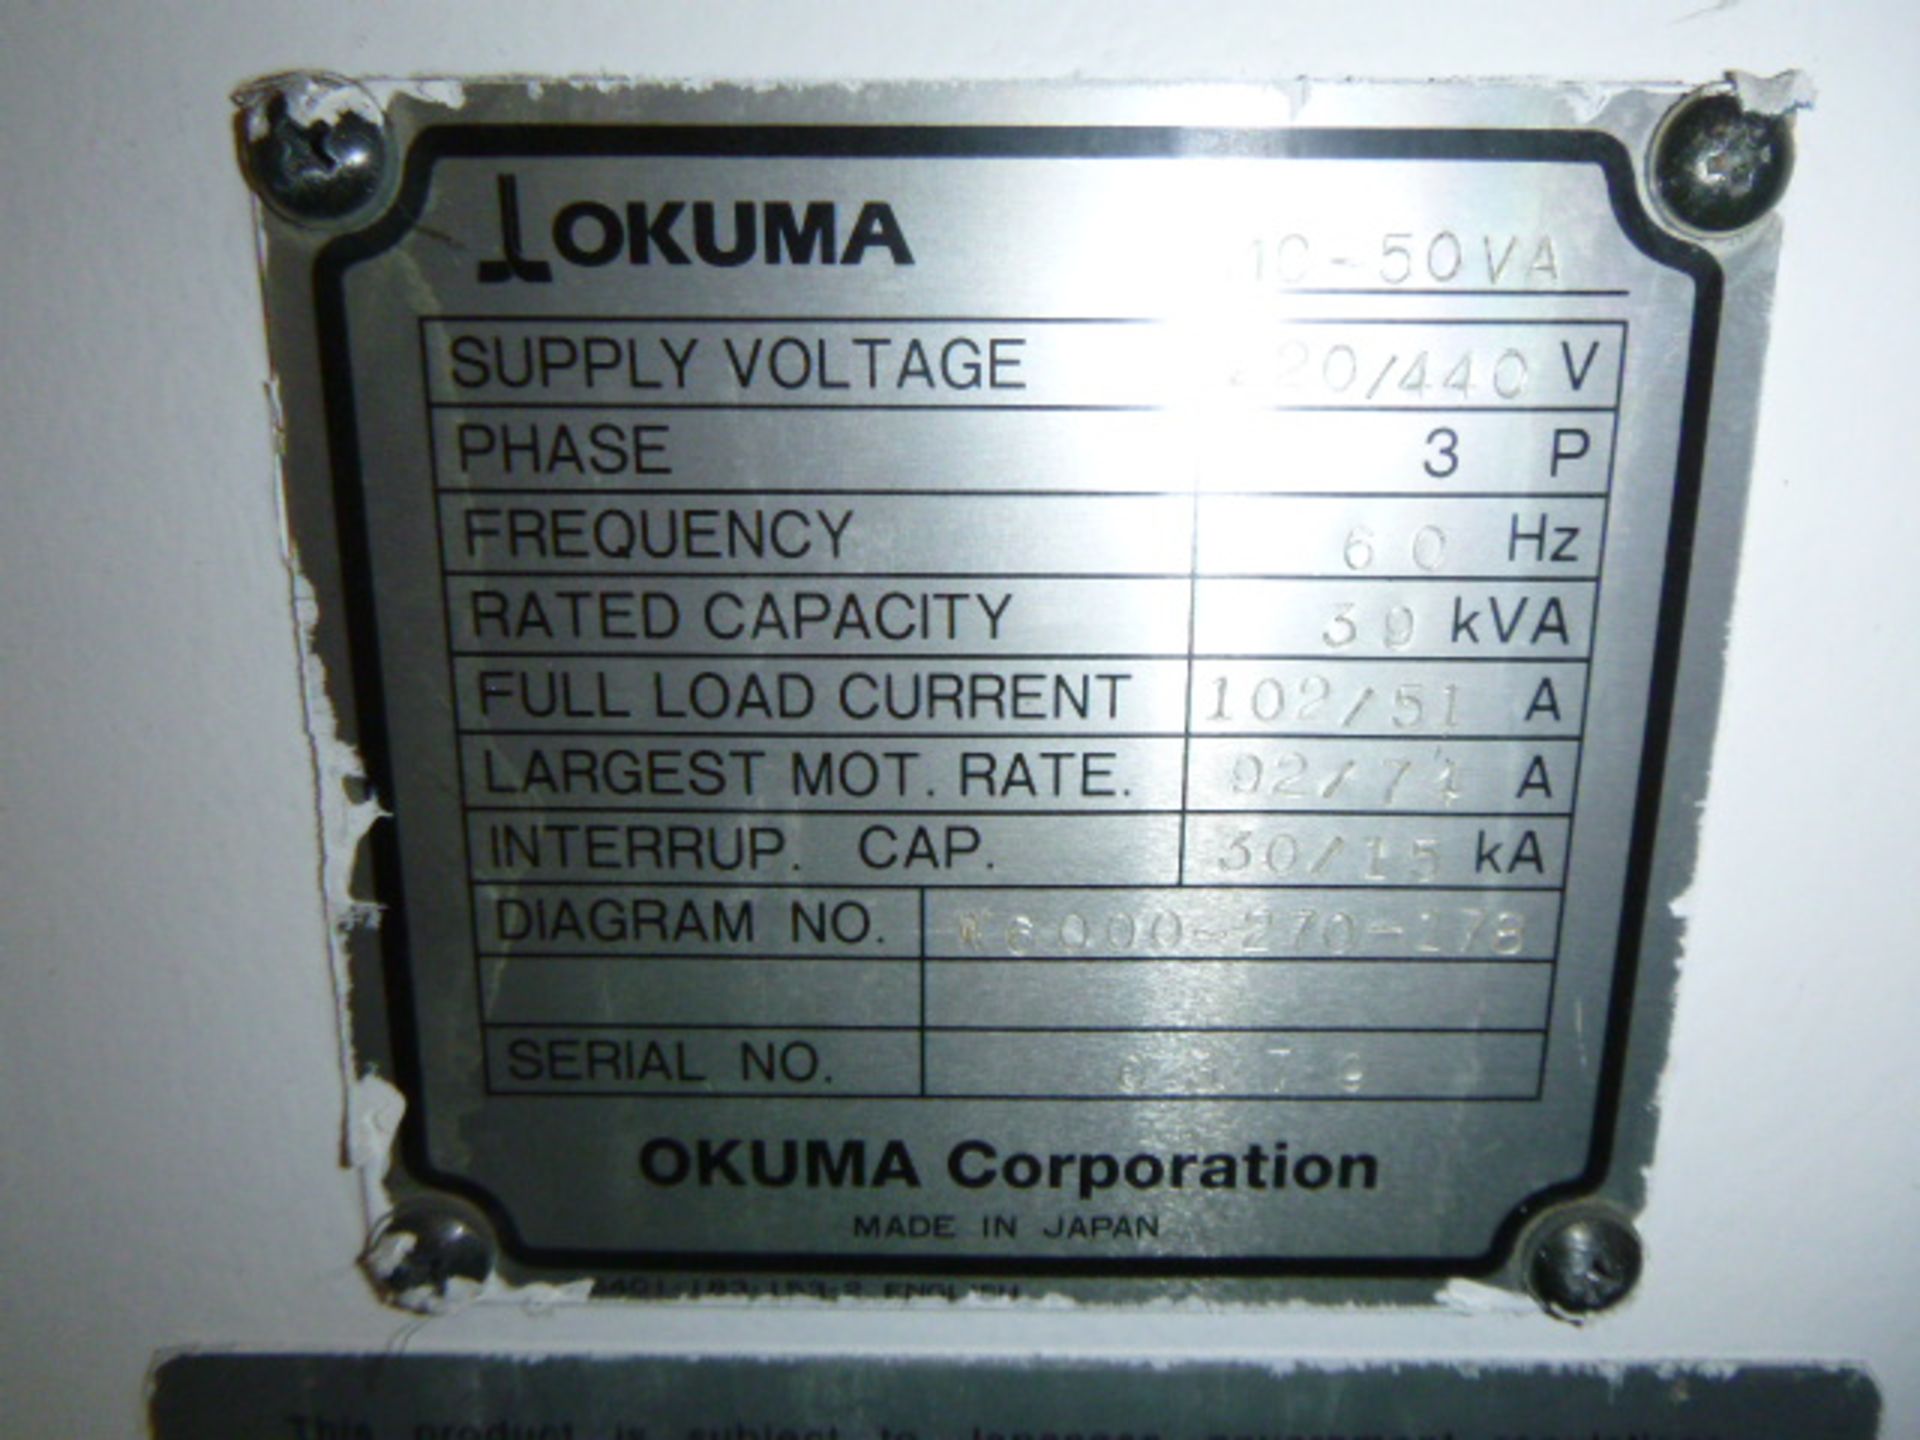 Okuma MC-50VA Vertical Machining Center w/ 4th Axis - Image 6 of 9